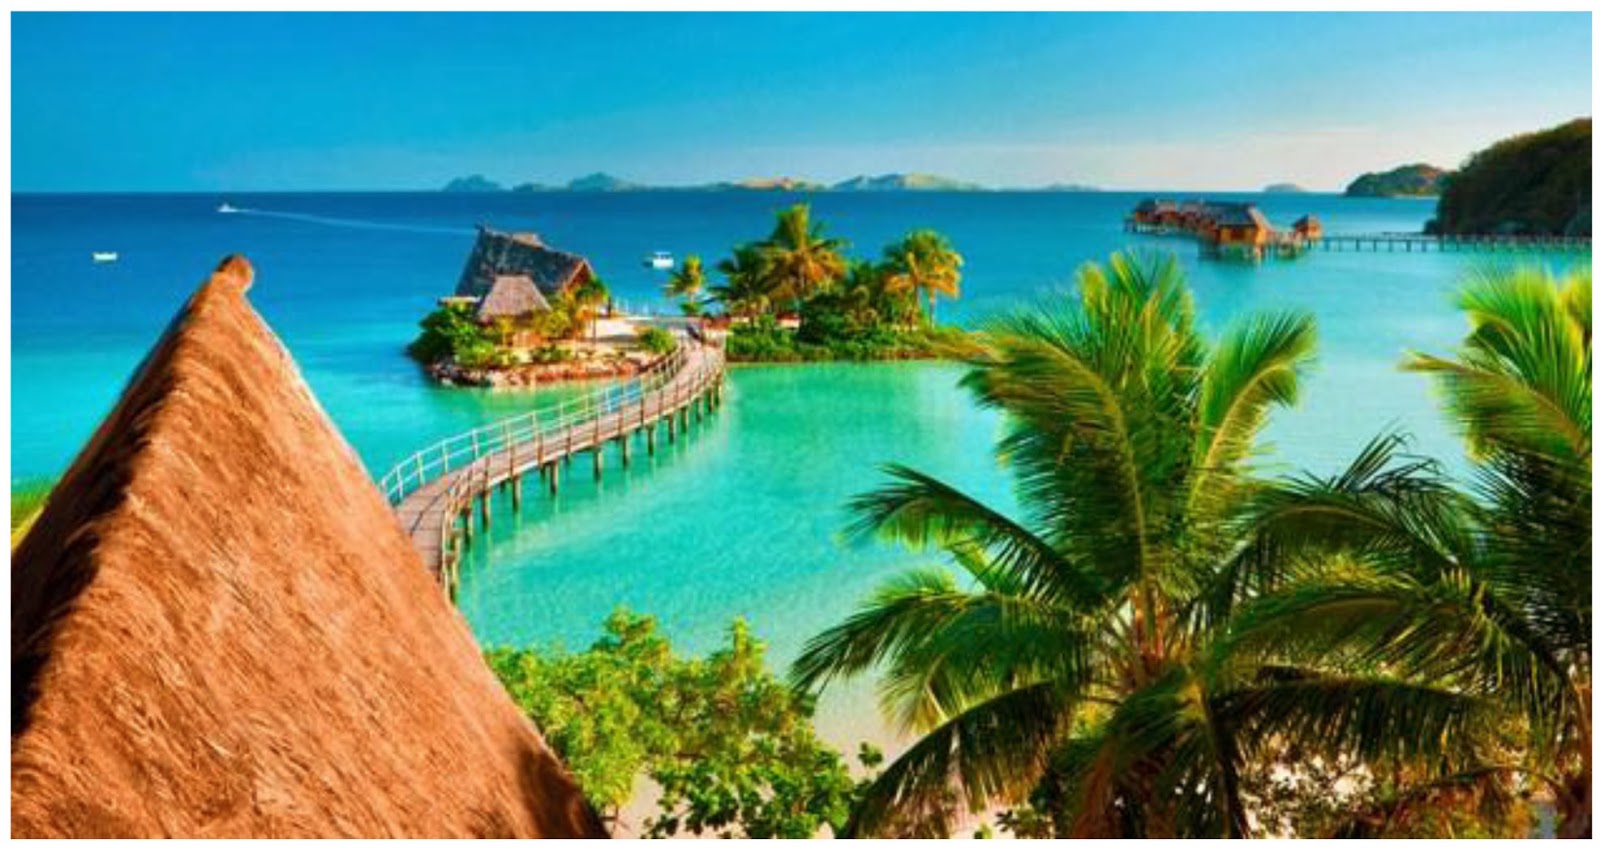 Wallpaper: The Maldive Islands Resort Is a World Best Romantic Island